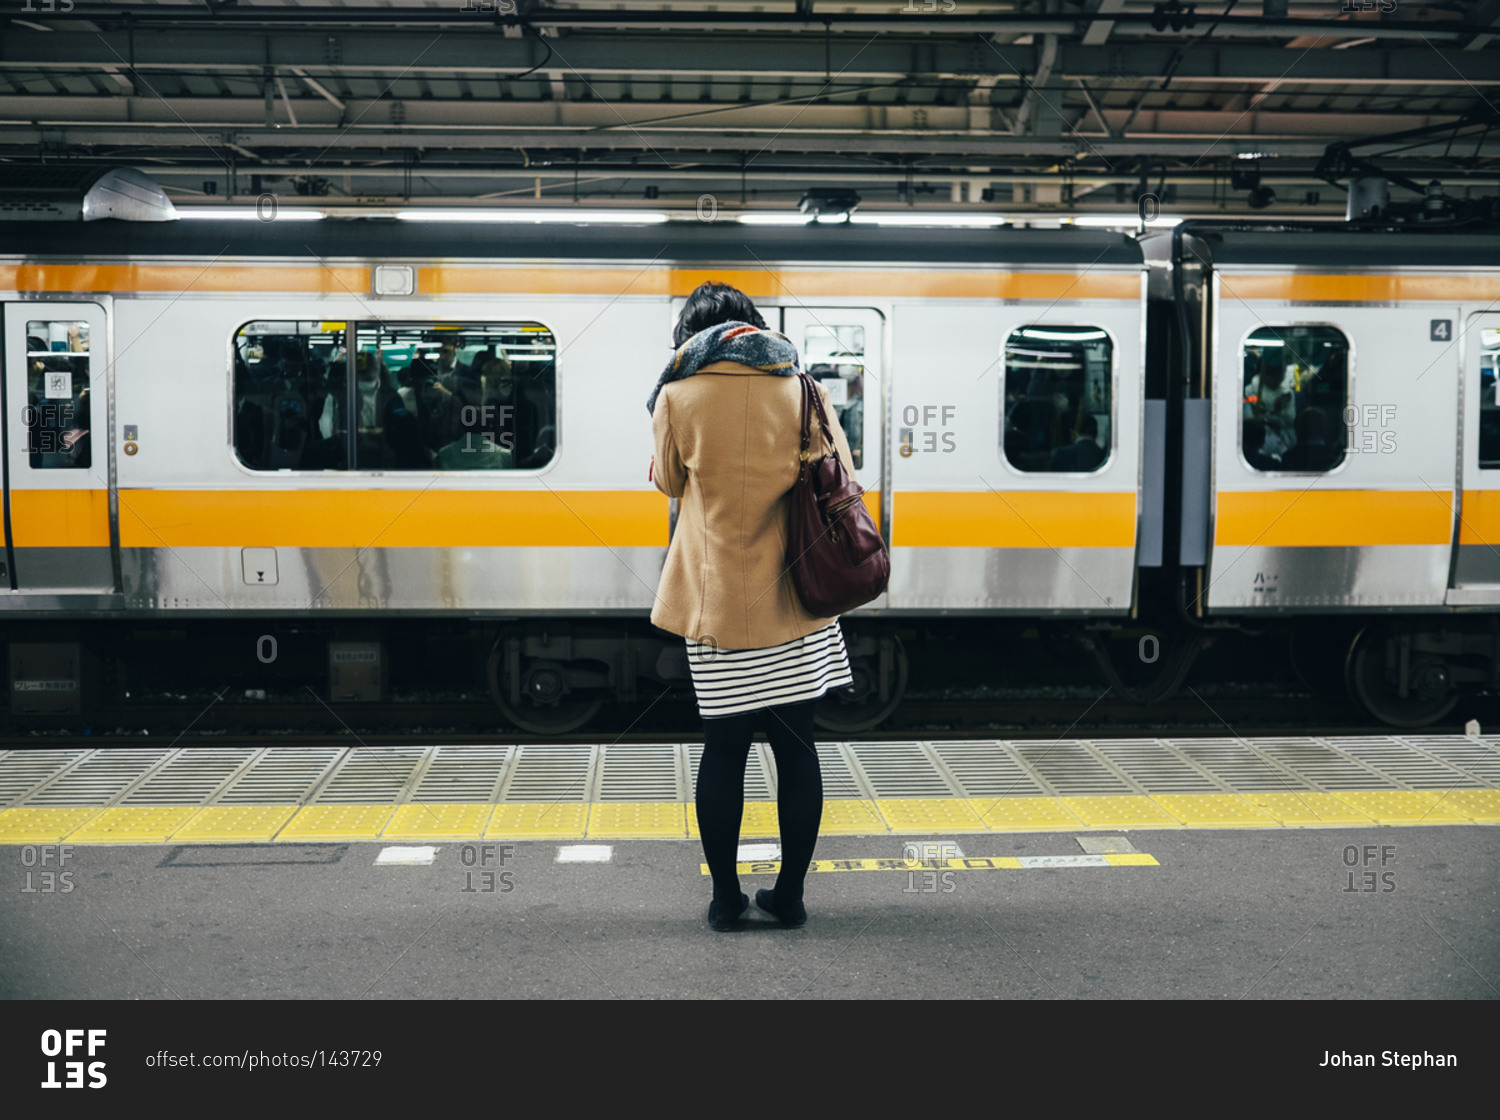 A woman waits for a subway train